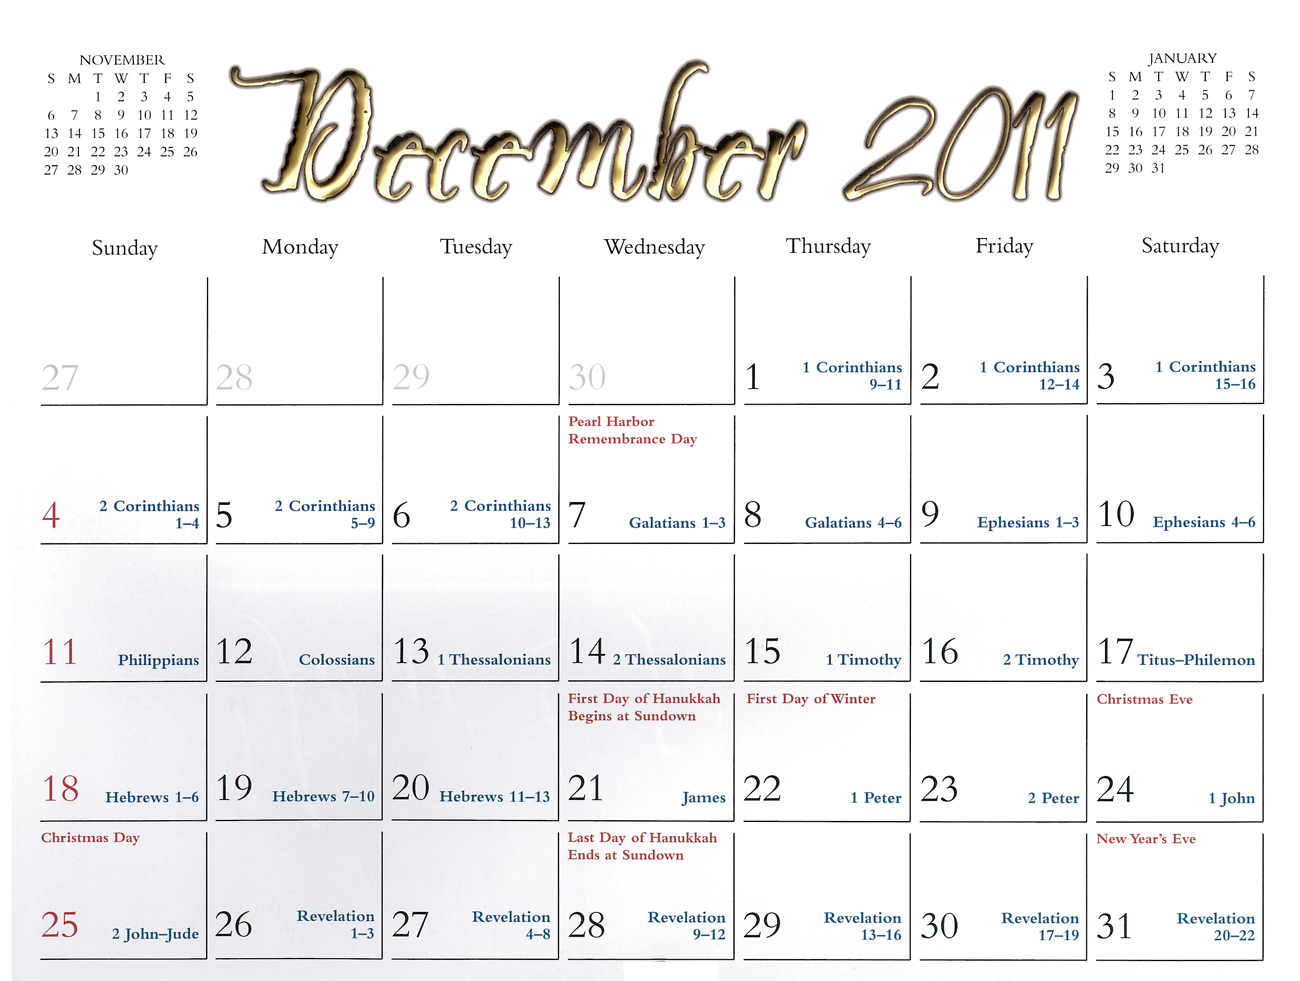 2011 Prophecy Calendar: December - Prophecies of John